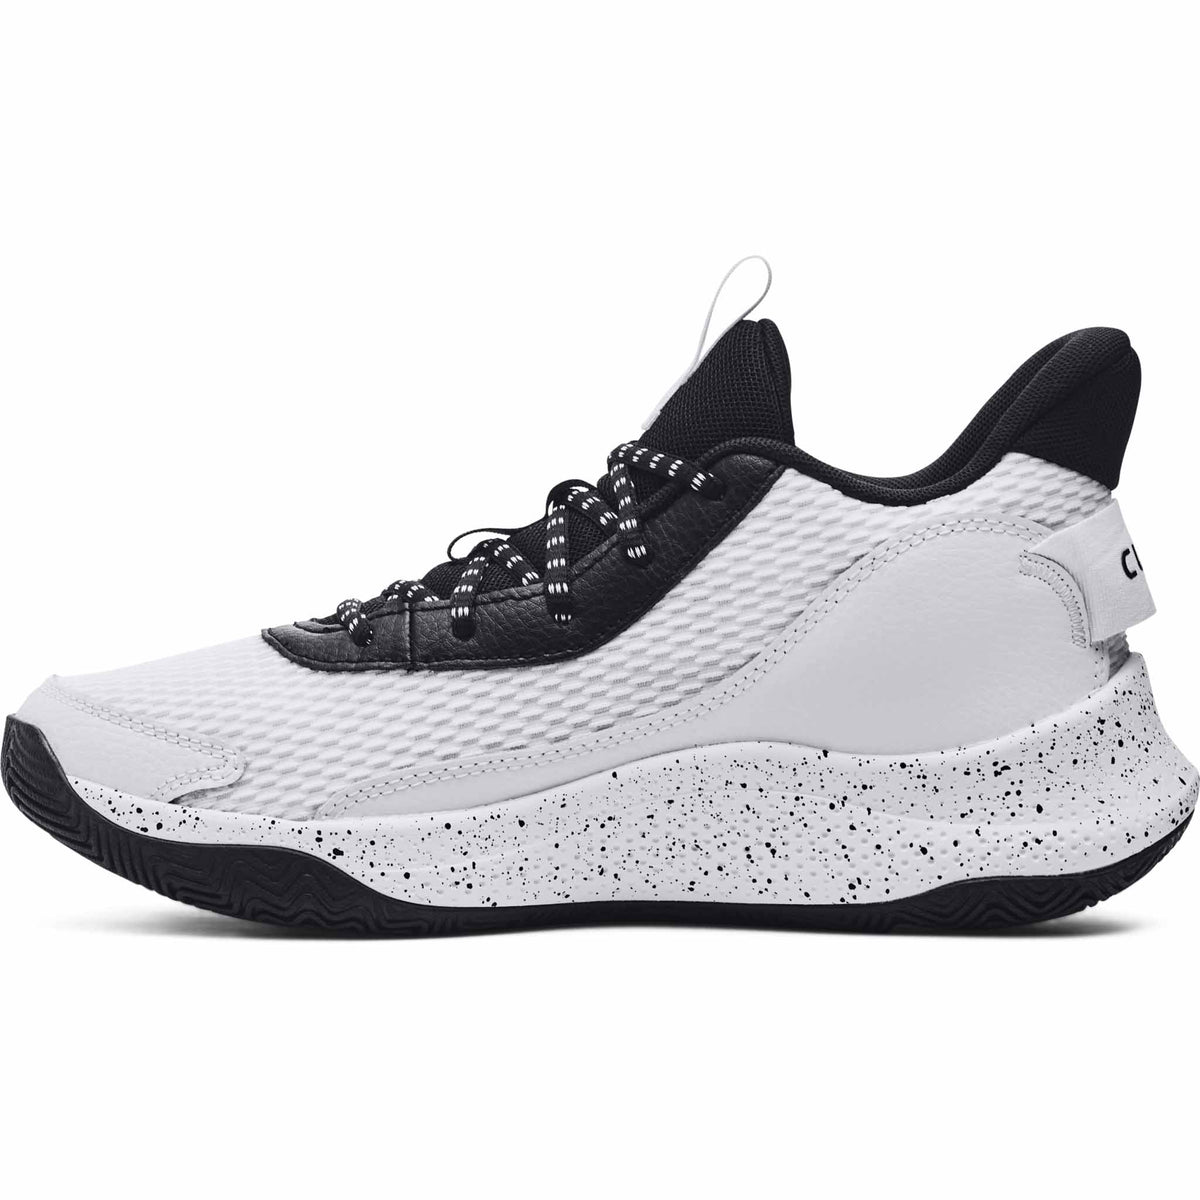 Under Armour Curry 3Z7 chaussures de basketball pour adulte - White / Black